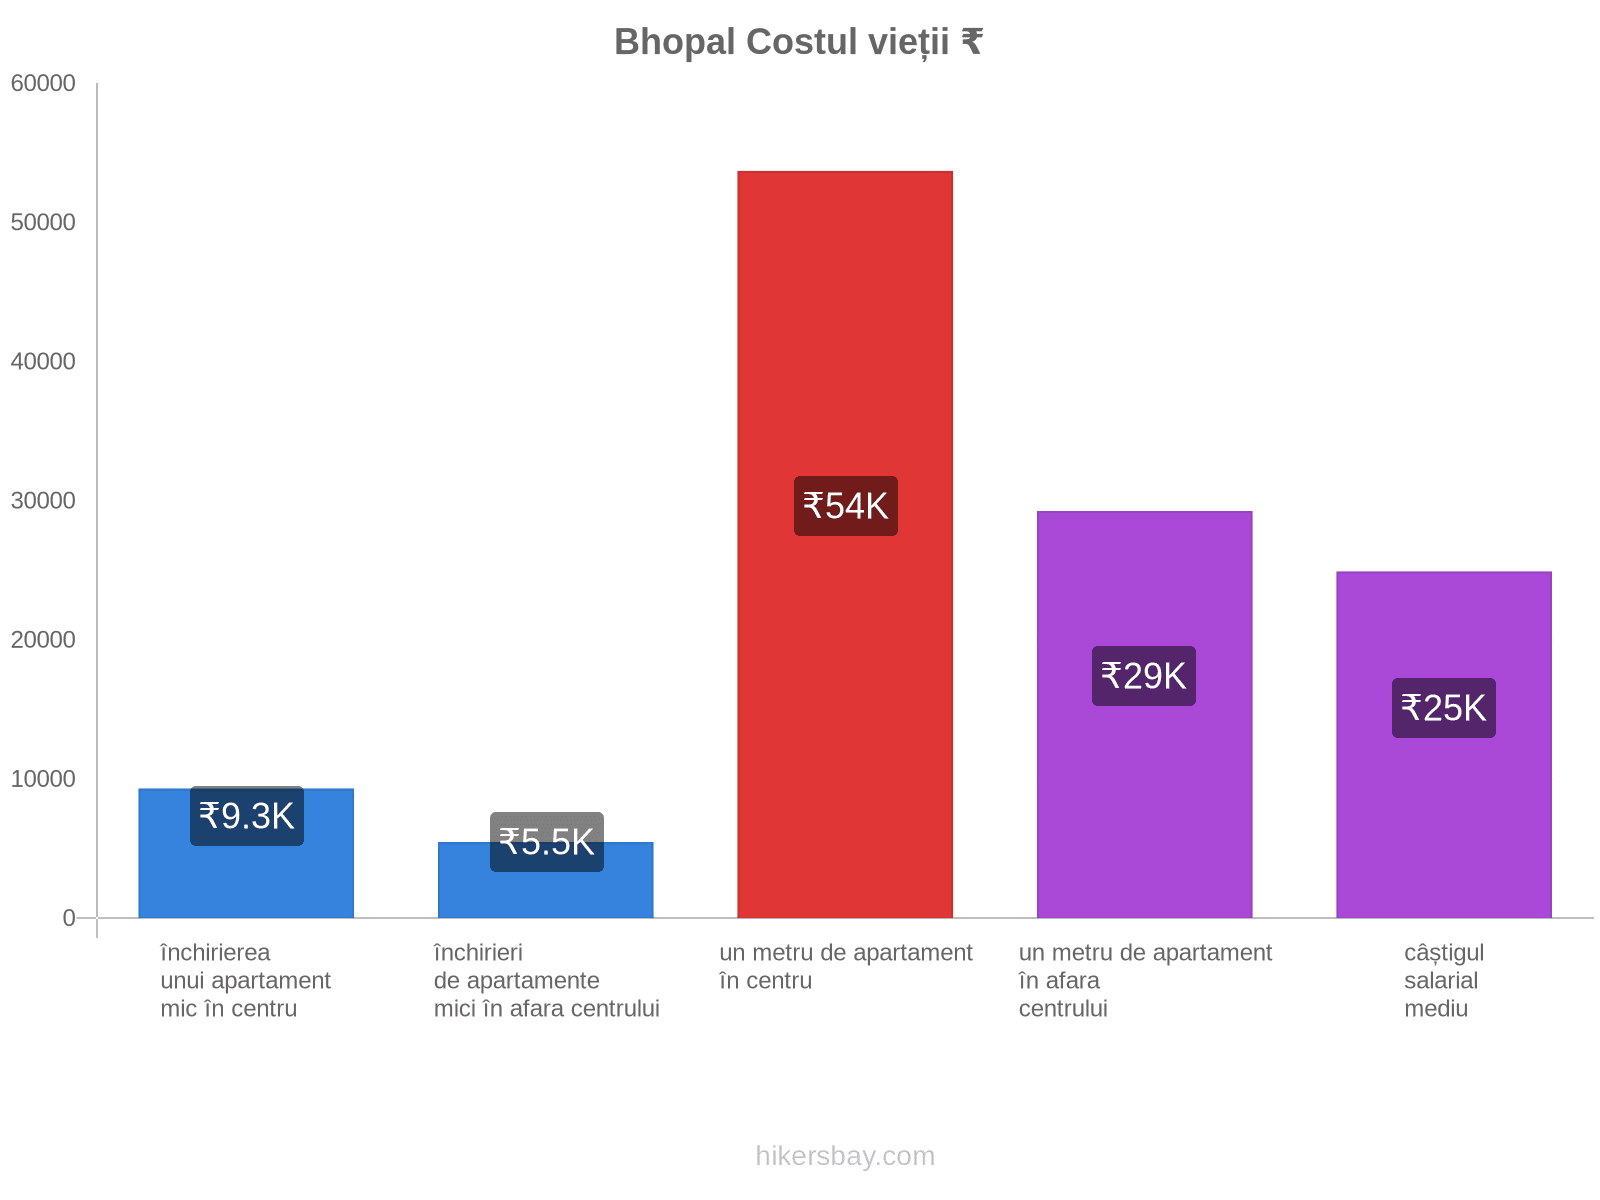 Bhopal costul vieții hikersbay.com